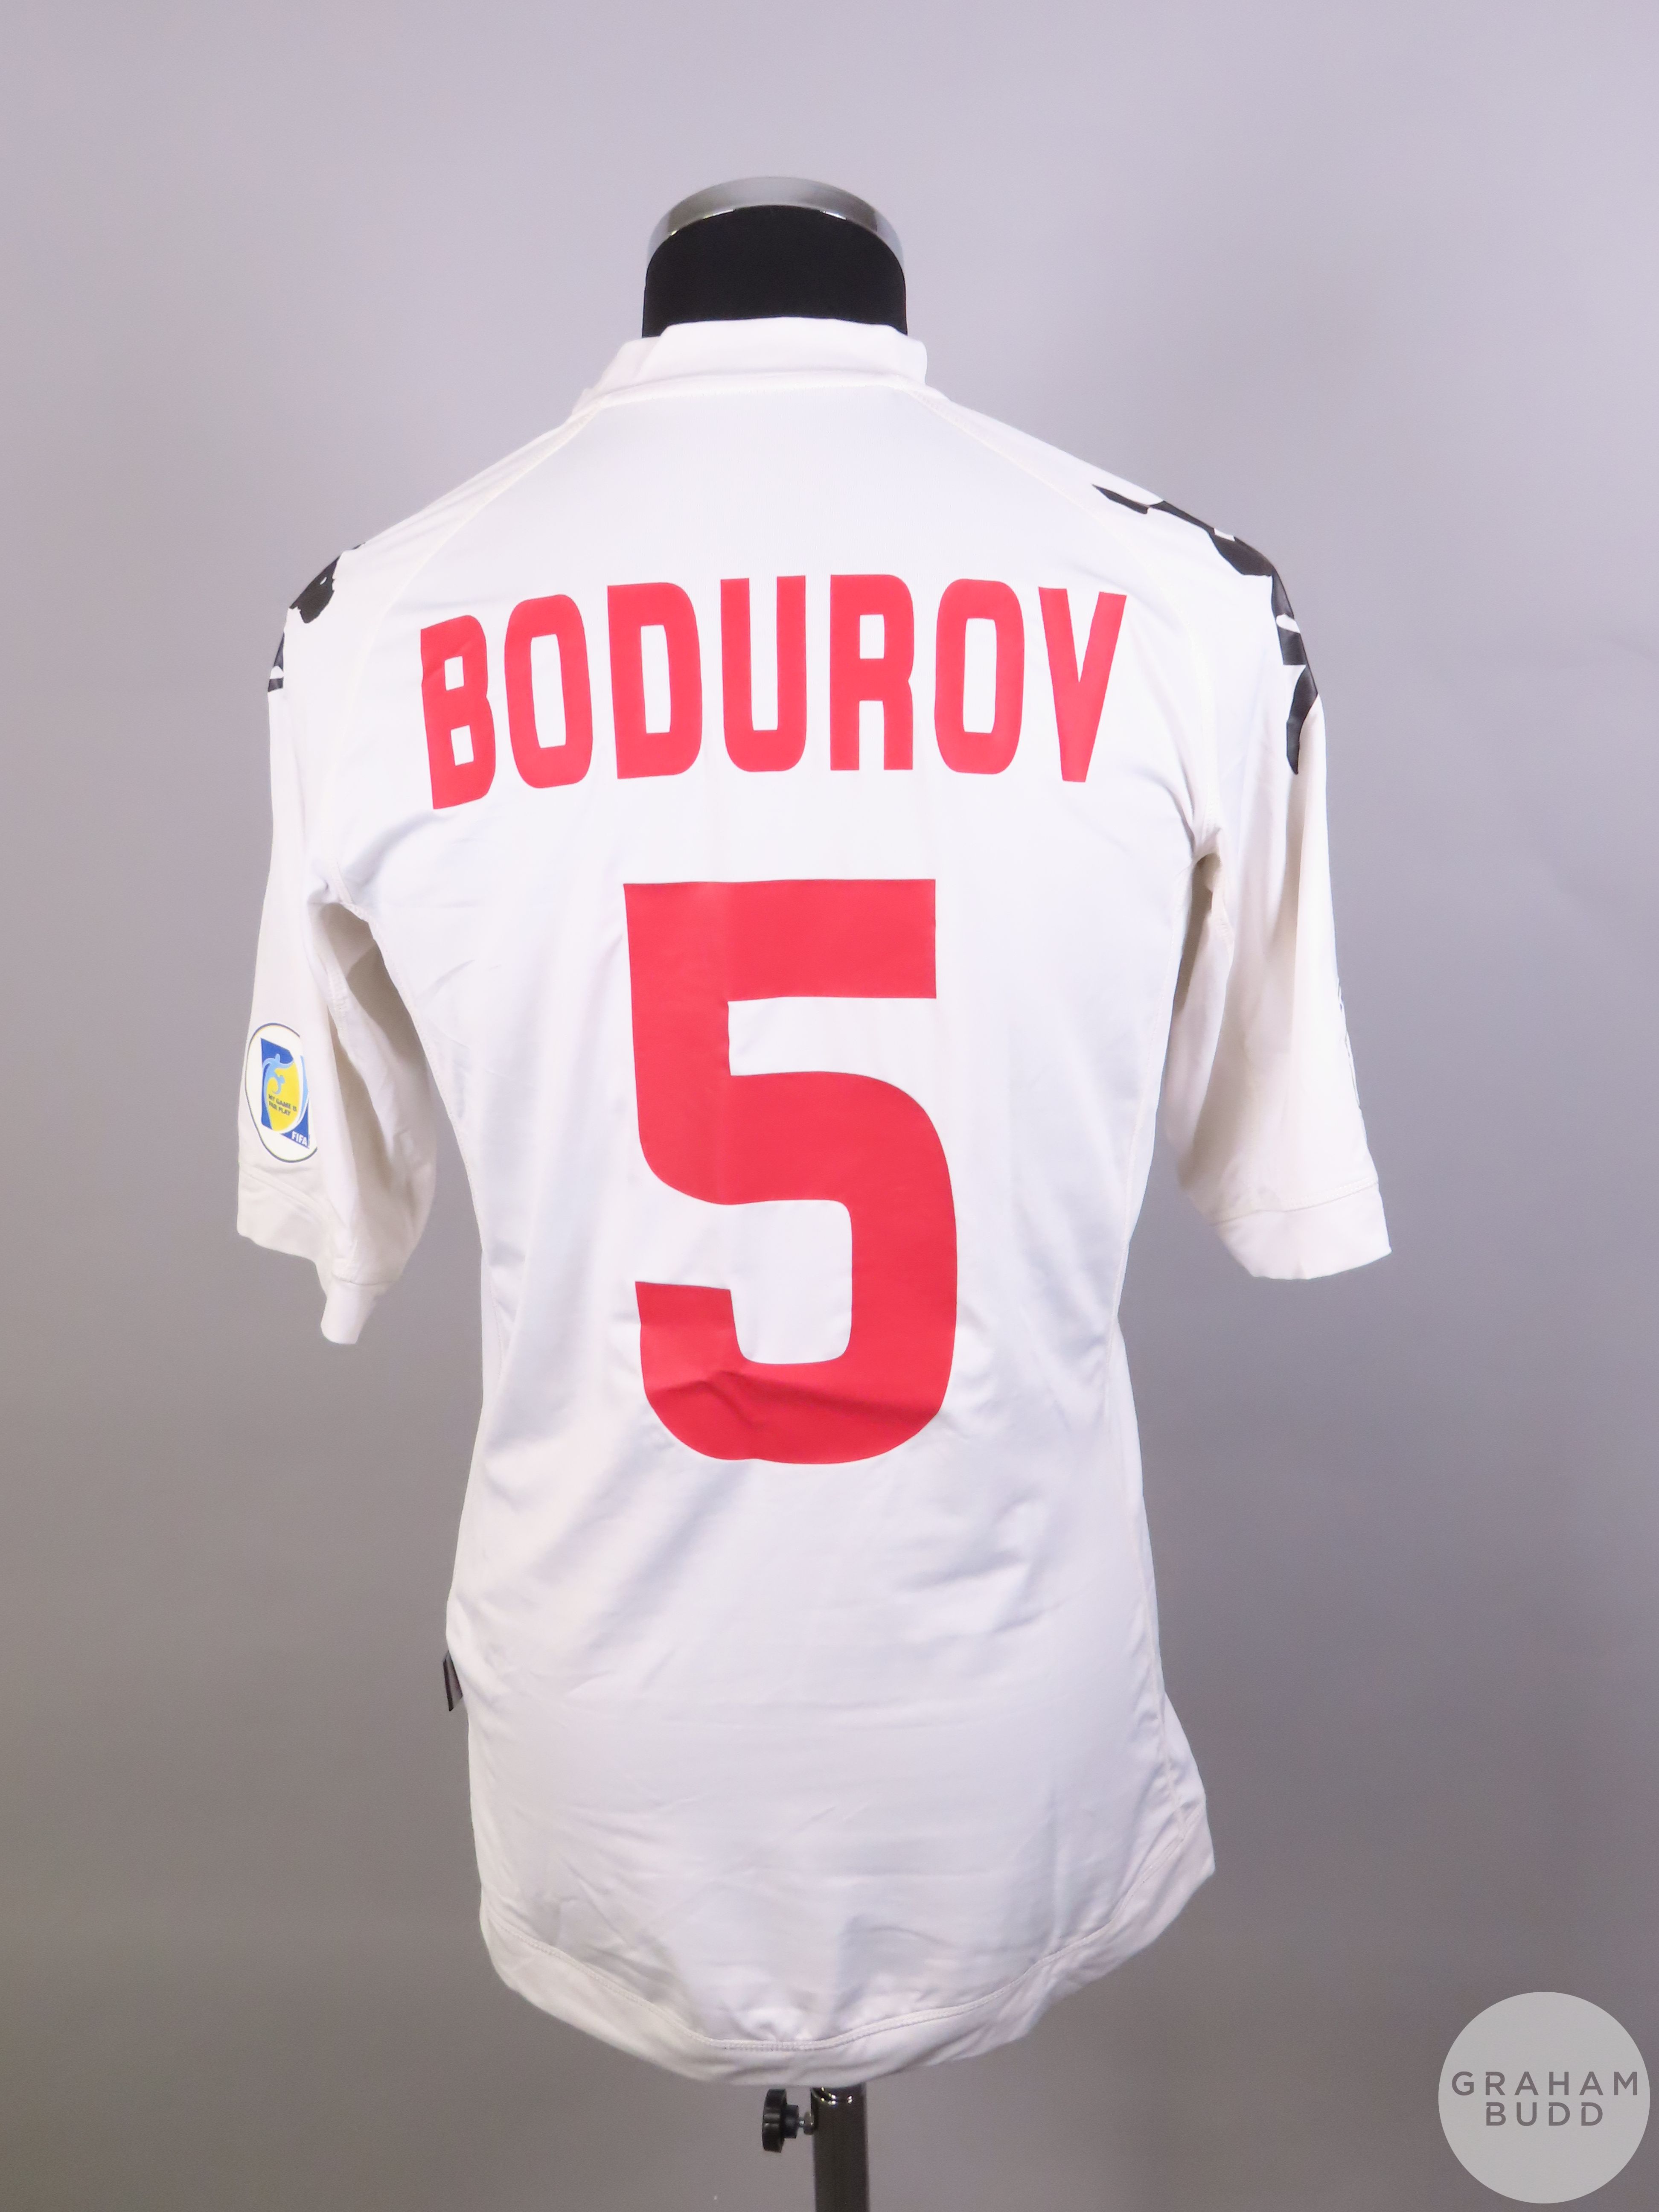 Nikolay Bodurov white Bulgaria No.5 2014 World Cup Qualifier home shirt, 2011, - Image 2 of 2